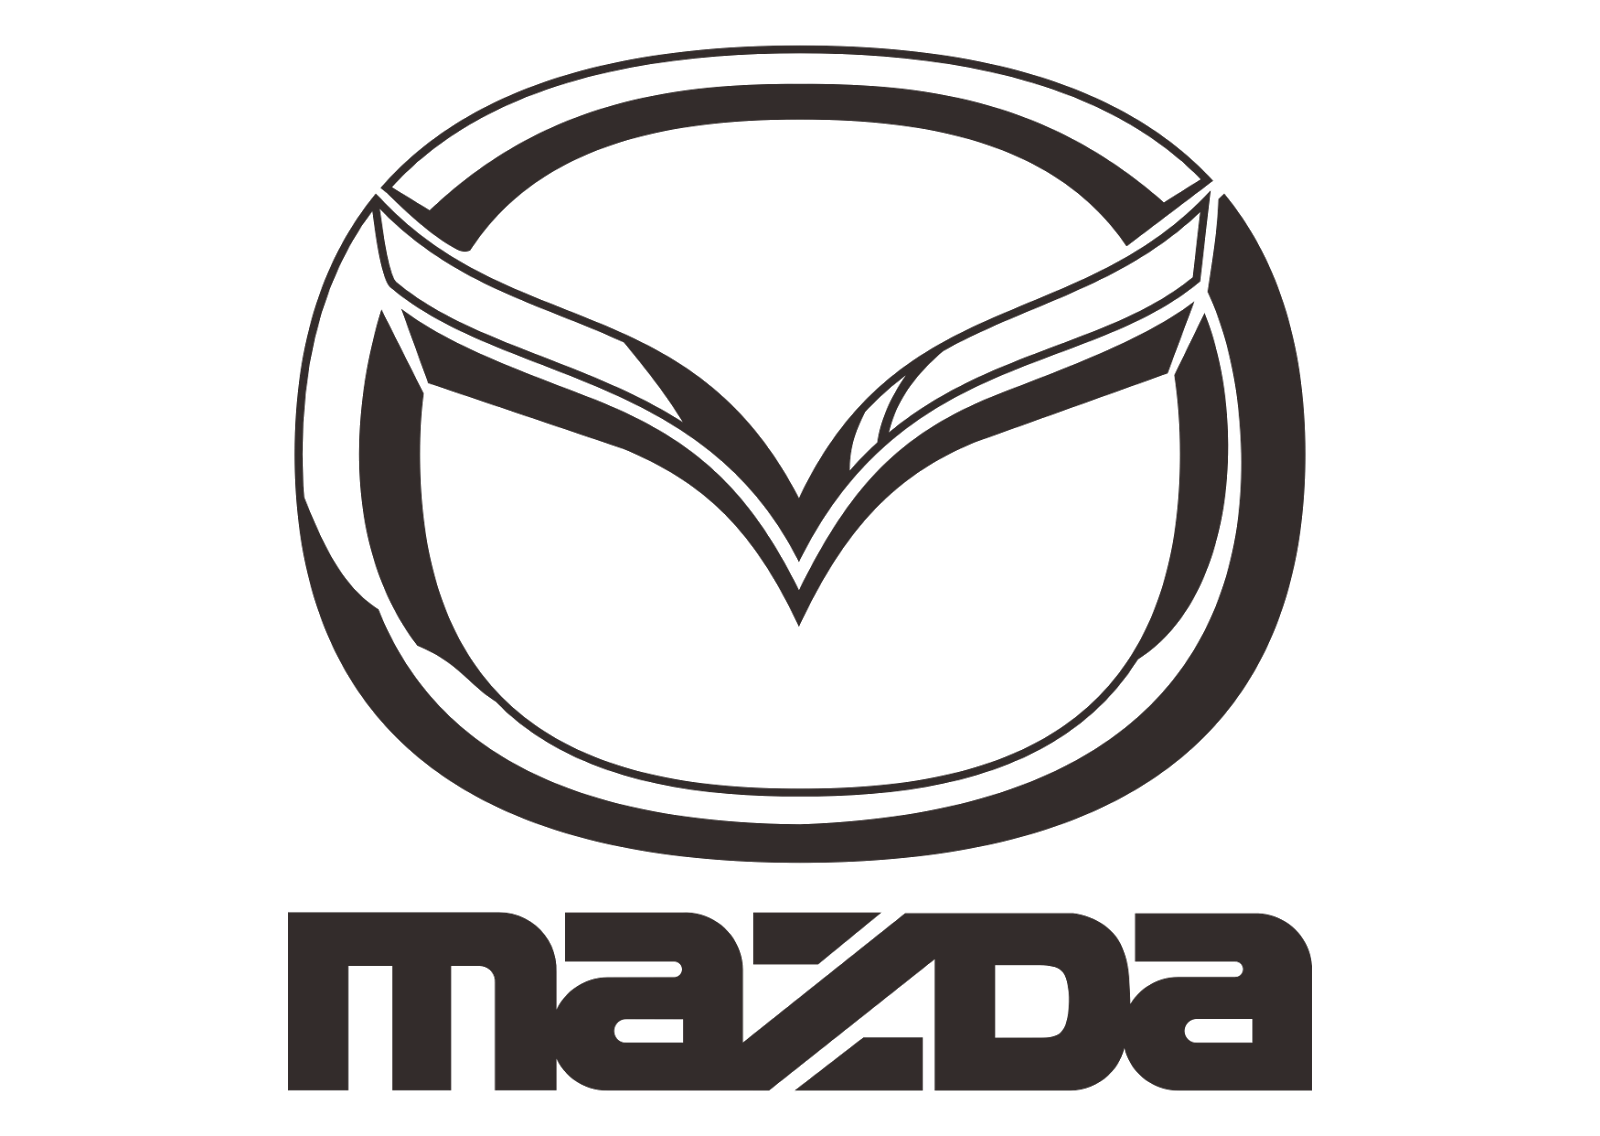 Mazda Logo Png Download - 512